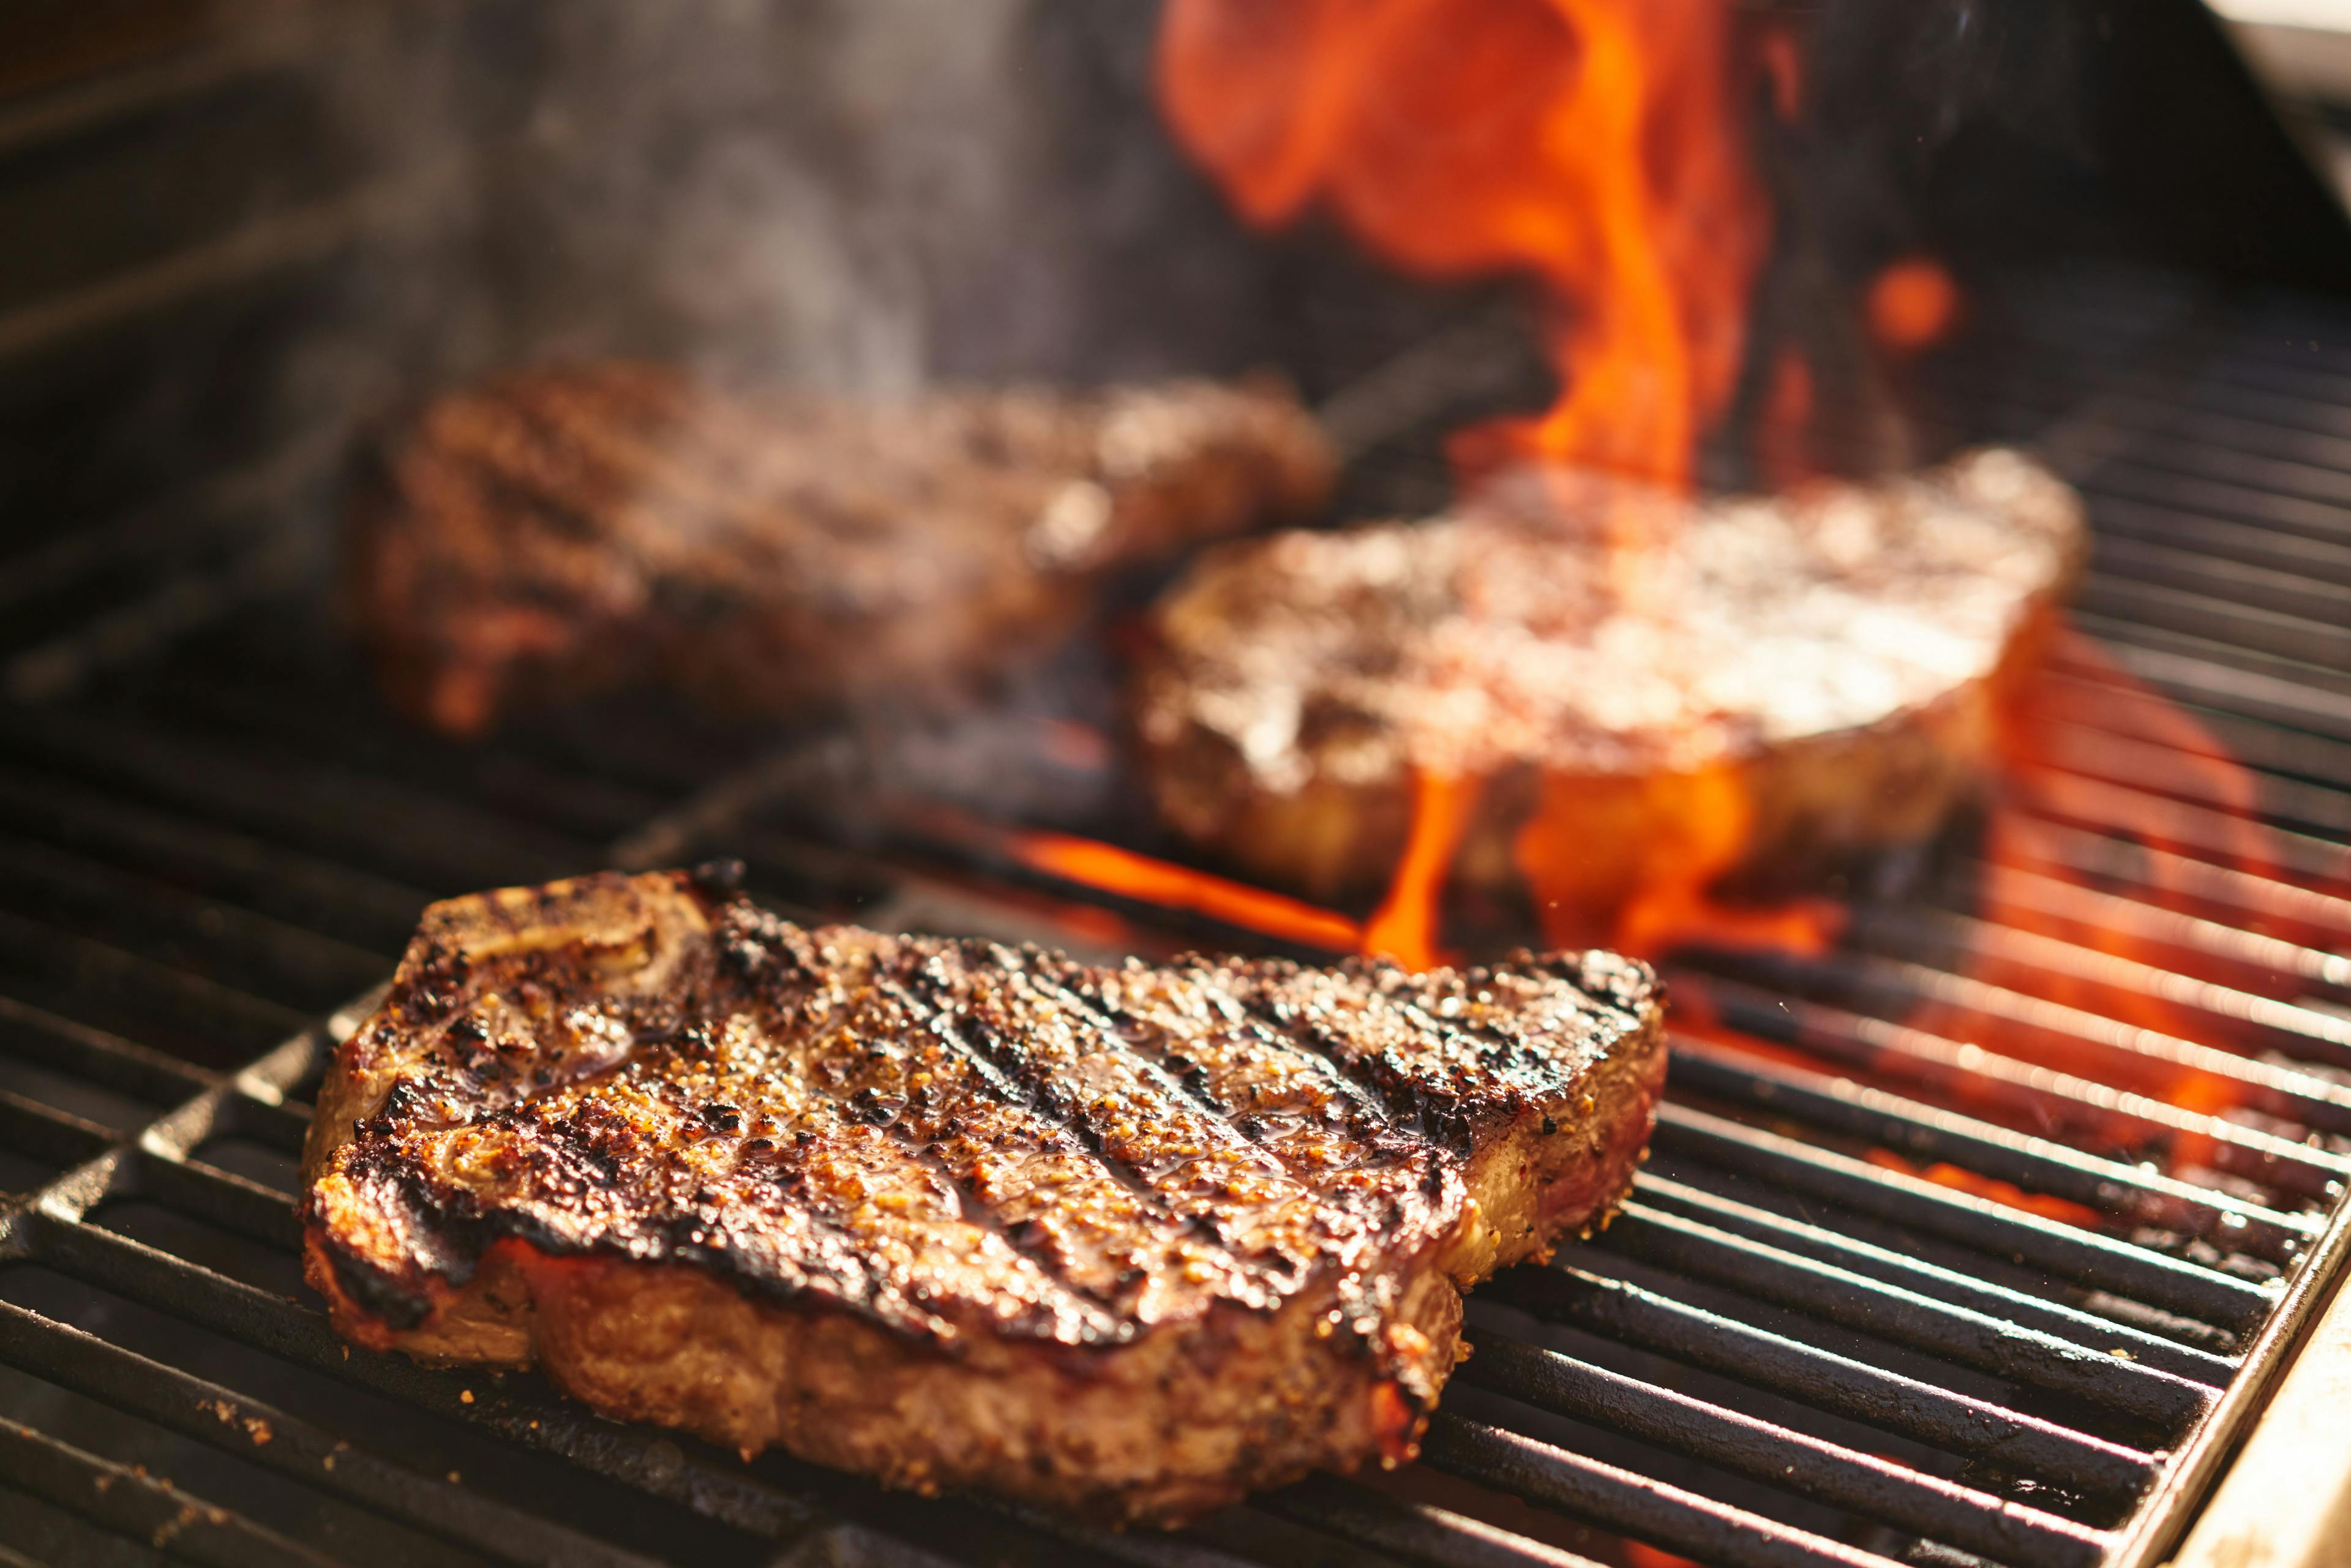 steak on grill | Image credit: Joshua Resnick - stock.adobe.com